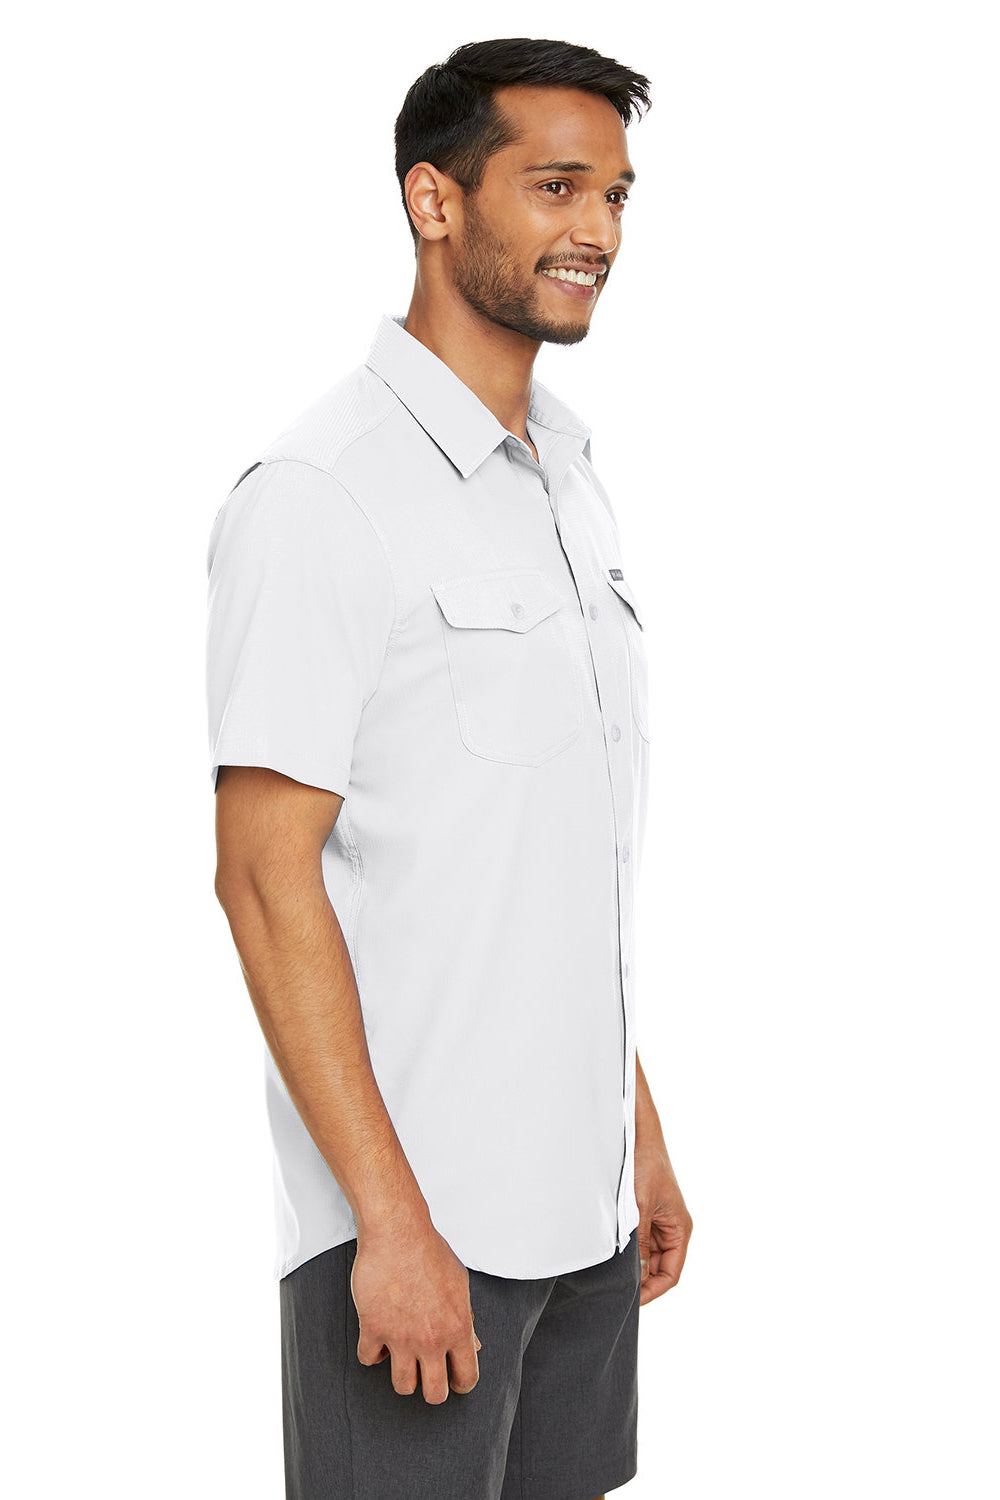 Columbia 1577761 Mens Utilizer II Short Sleeve Button Down Shirt White 3Q